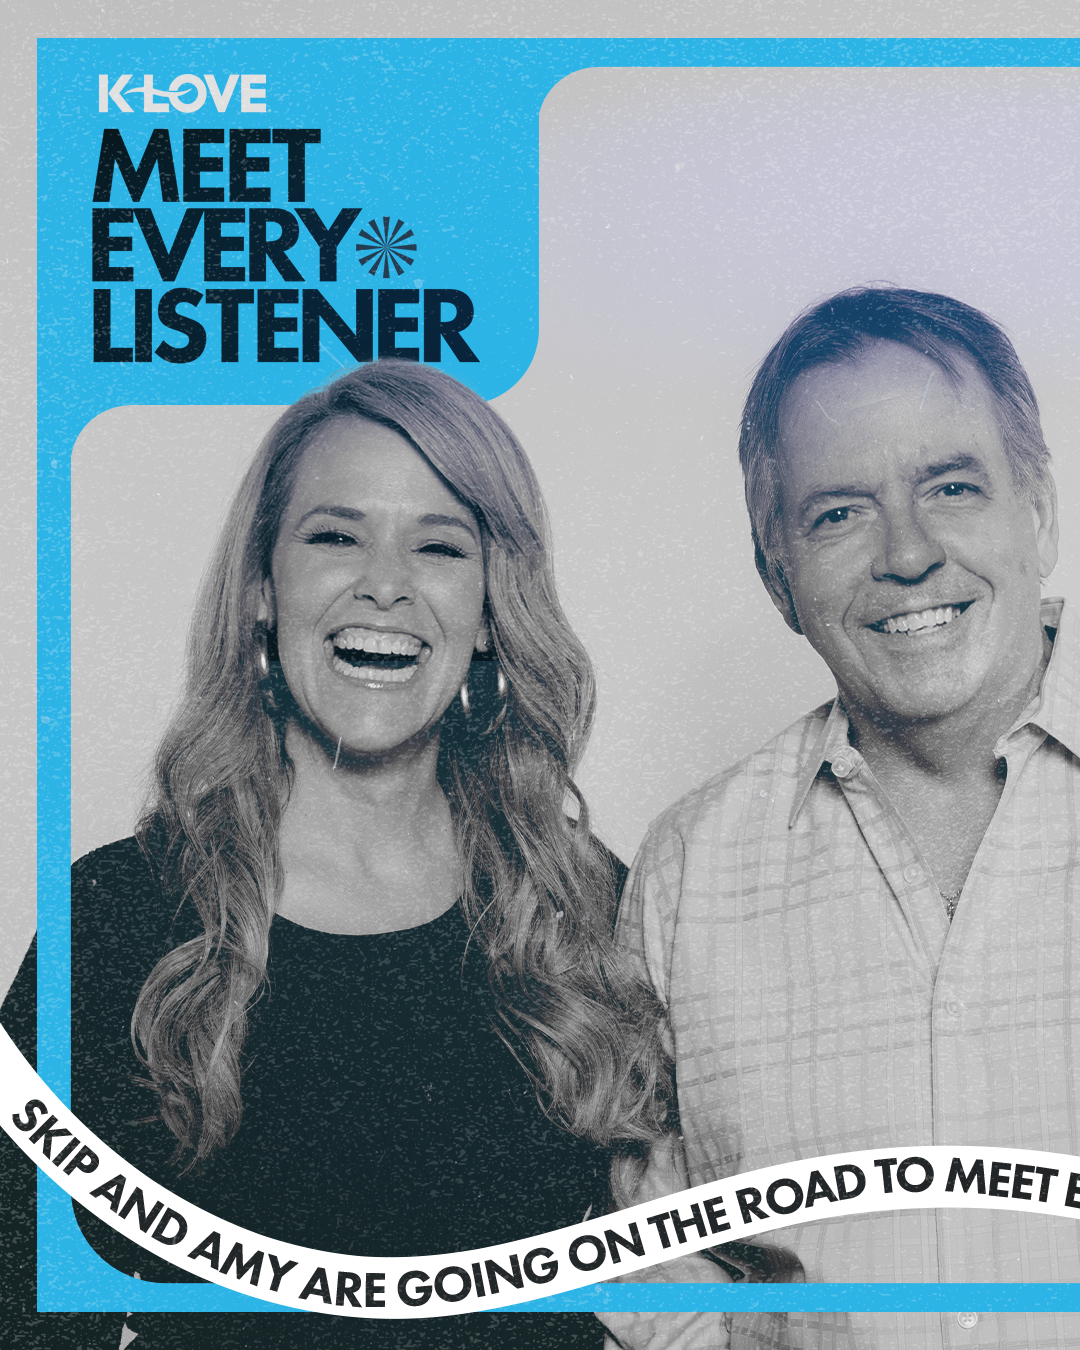 KLOVE Meet Every Listener Tour Branding by Renee Butor on Dribbble